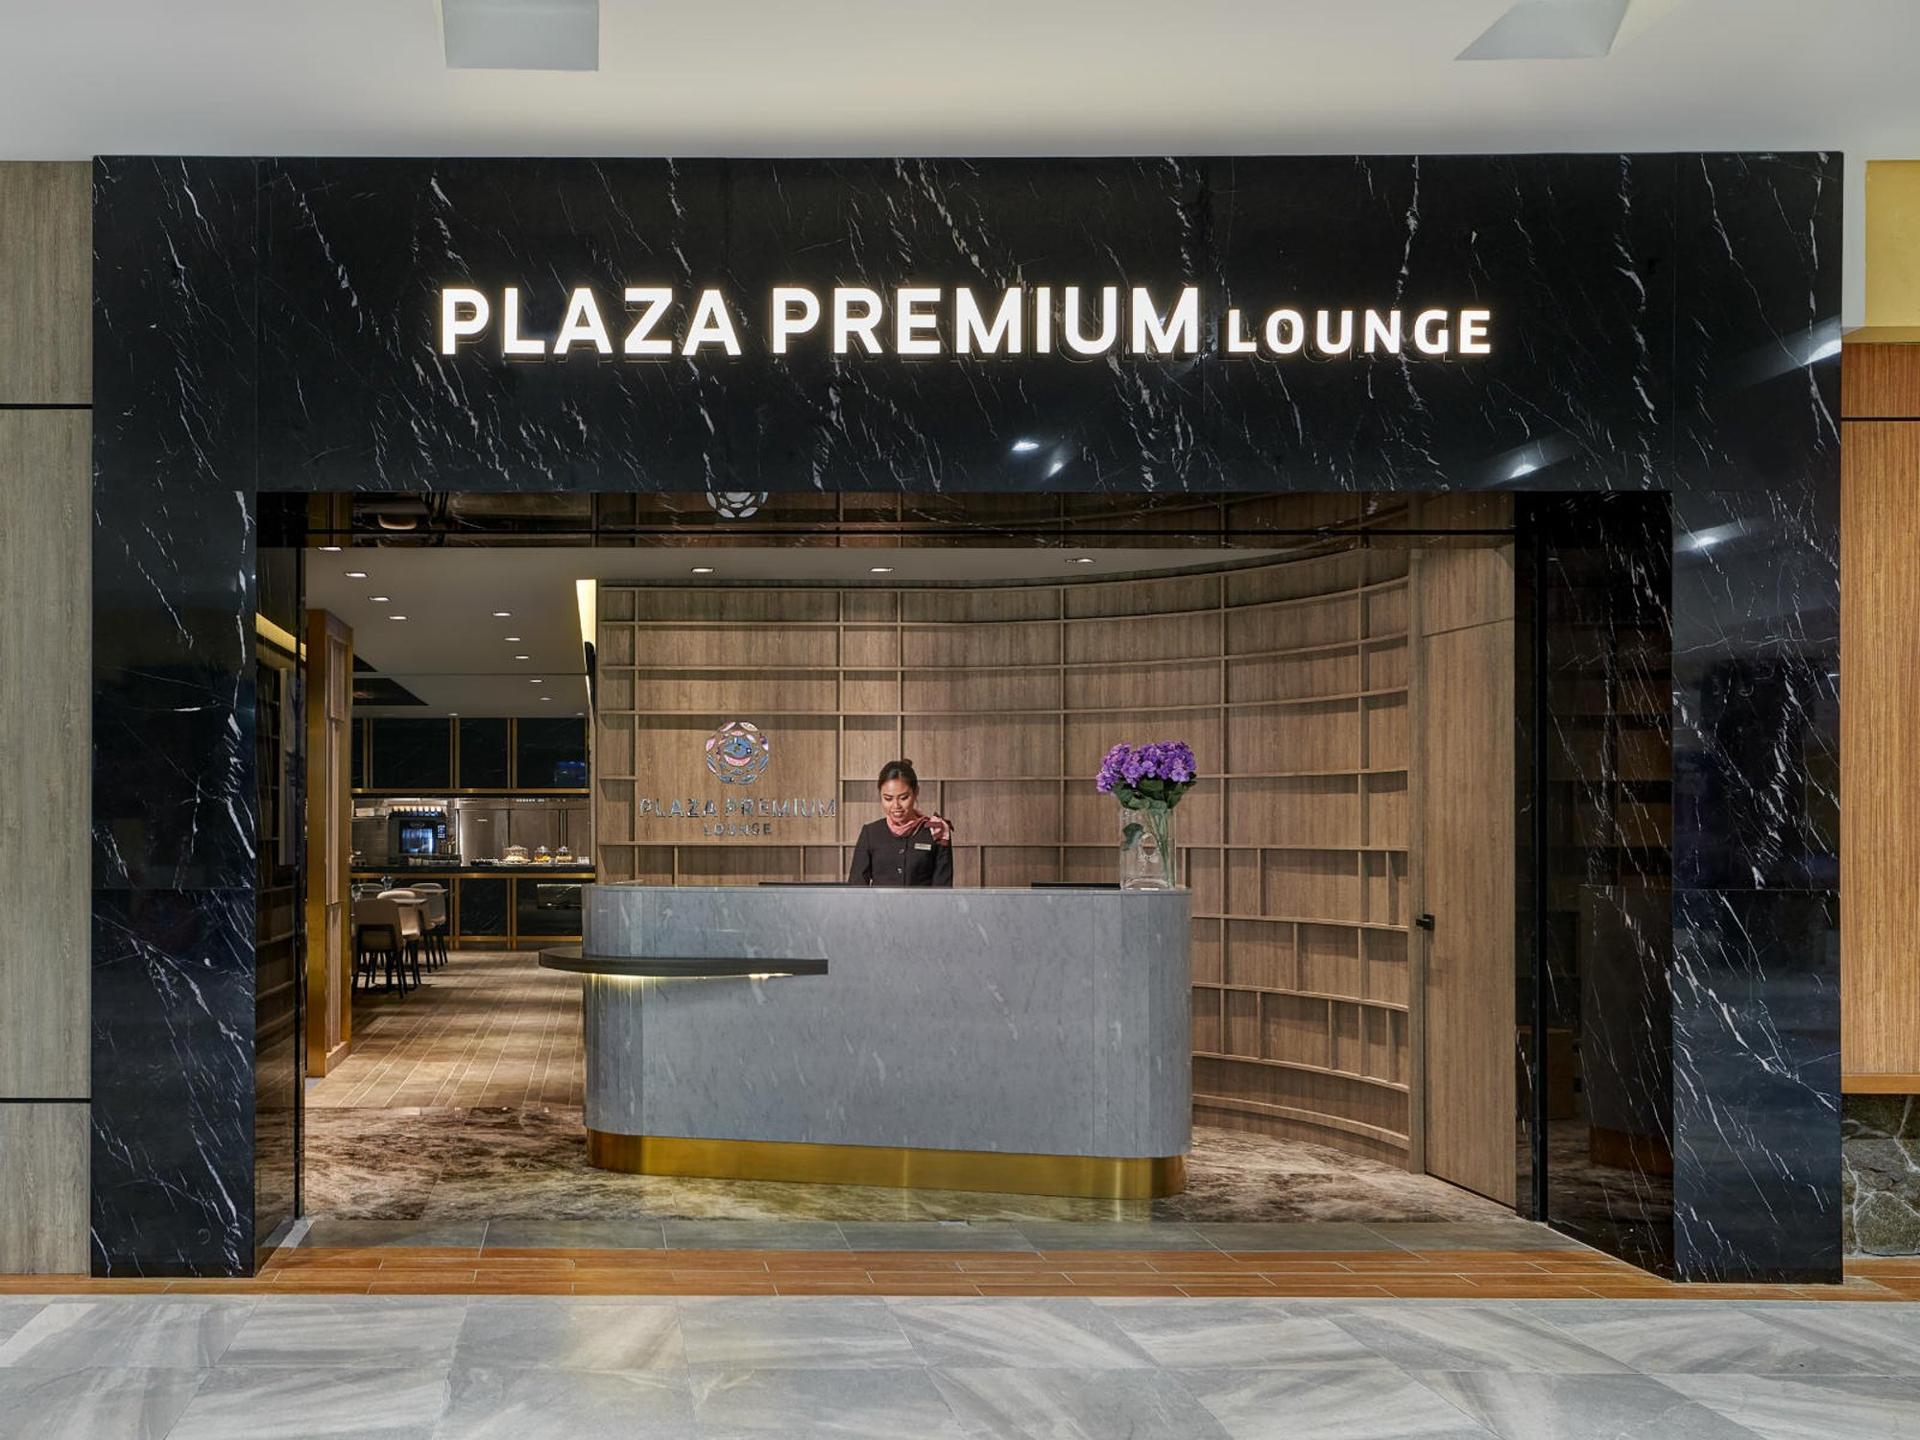 Plaza Premium Lounge image 1 of 26